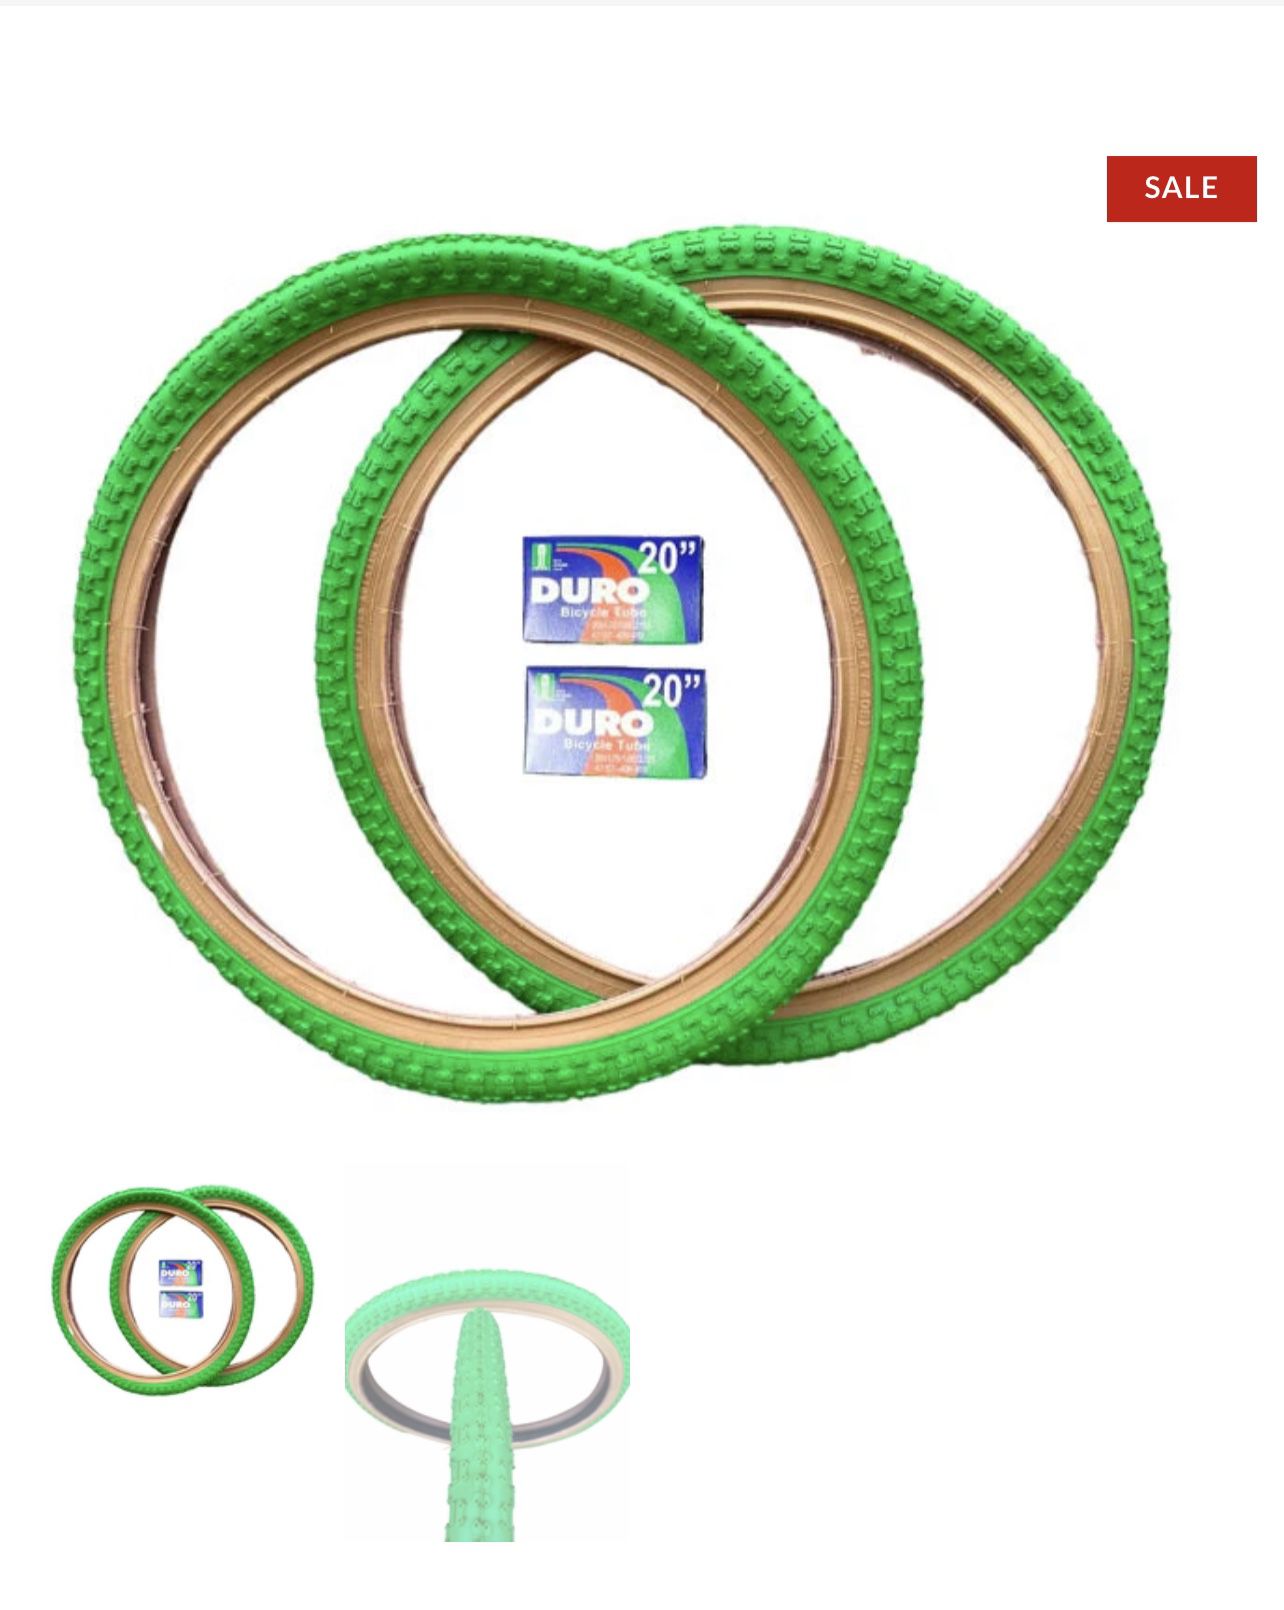 Wanda 20 x 1.75" Green Gum Wall Tires $35.99 Free inner tubes!!!!!